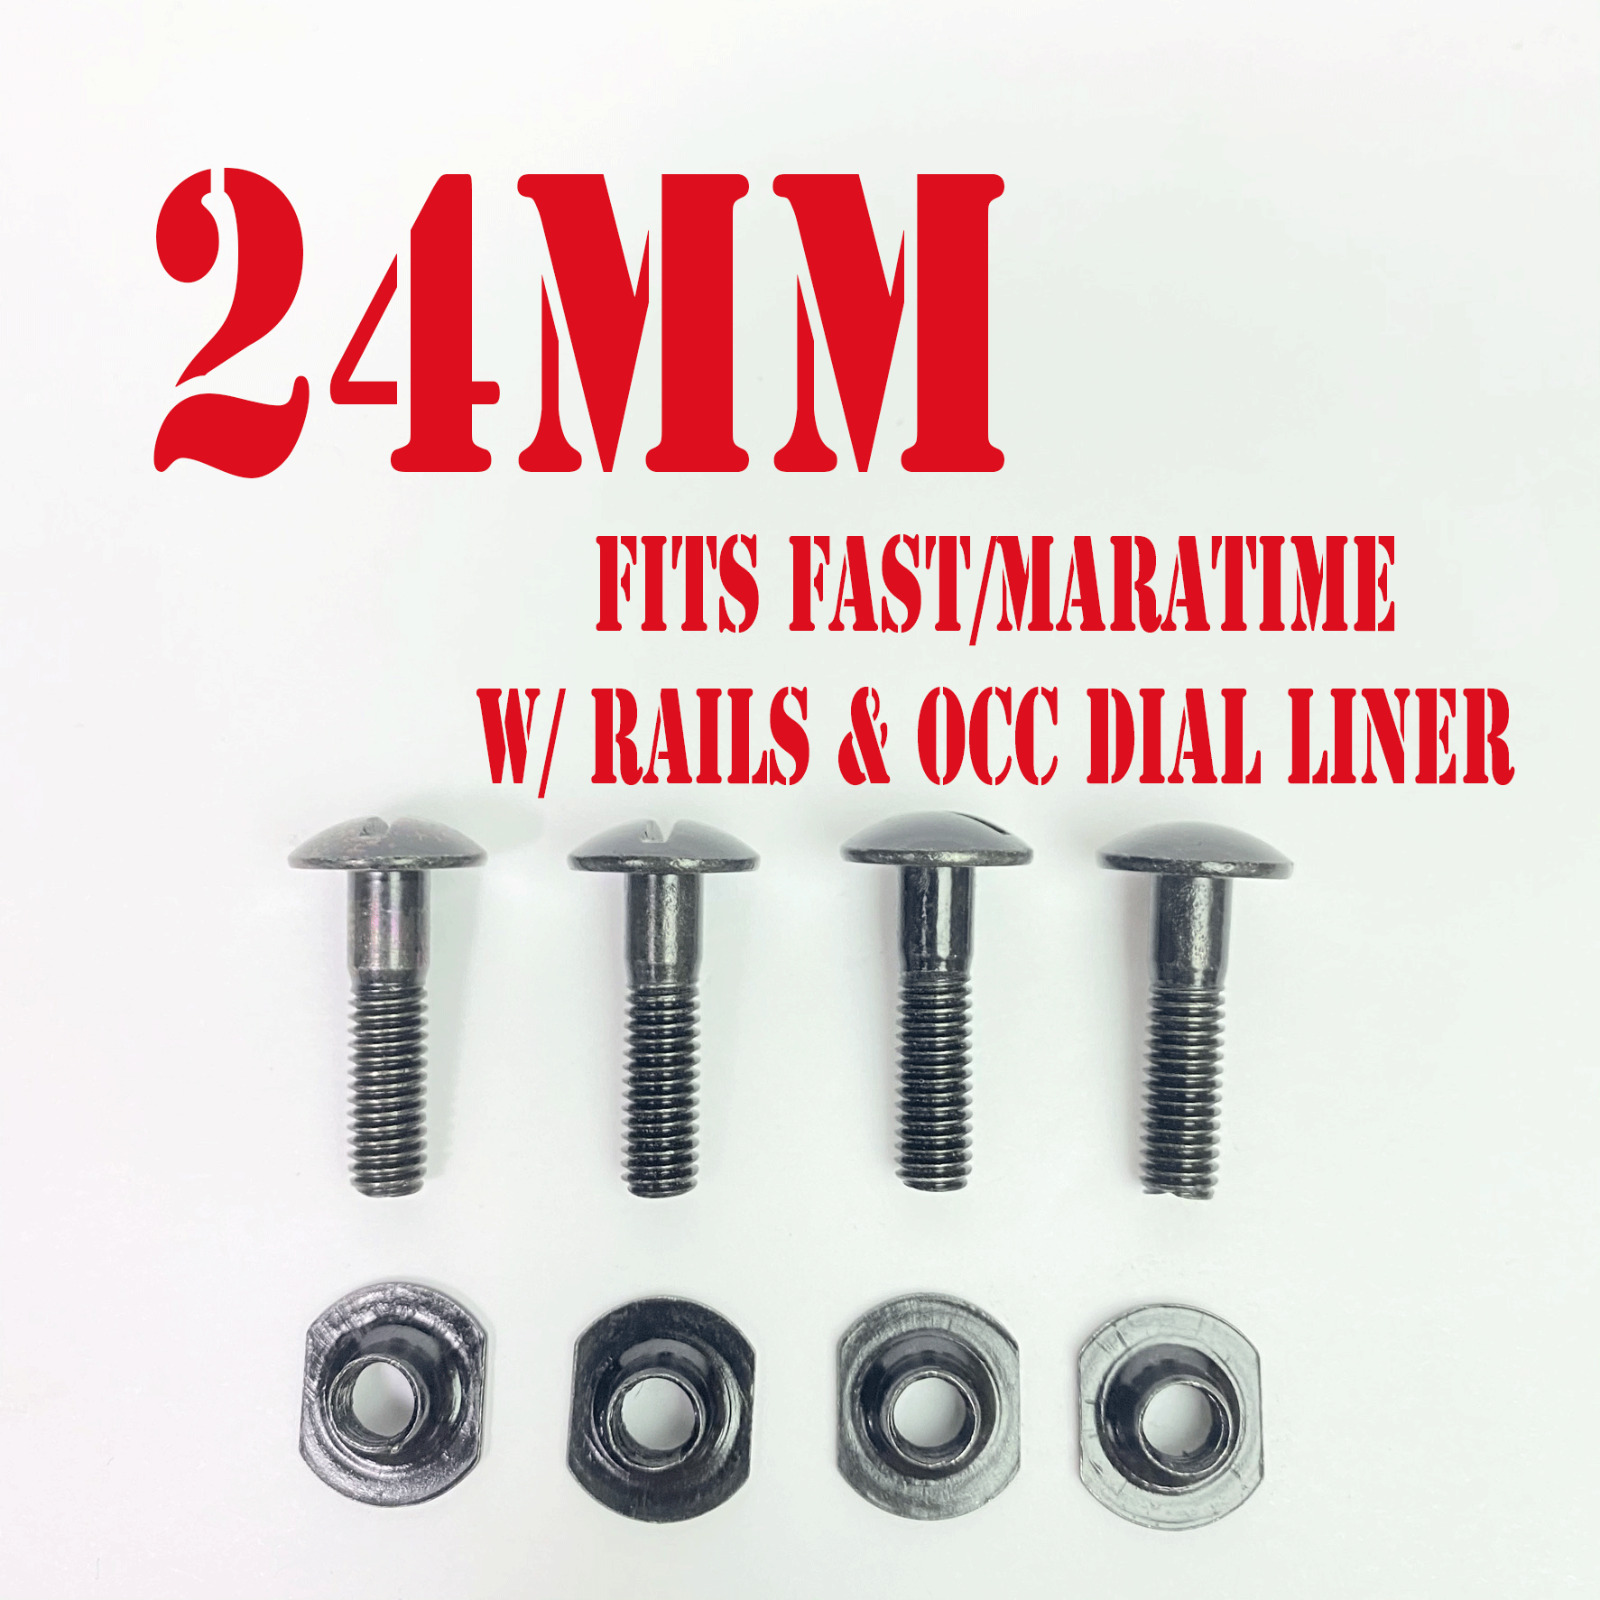 24mm FAST & MARITIME HELMET HARDWARE SET 4-POINT CHINSTRAP SCREW BOLT & NUT 4pk